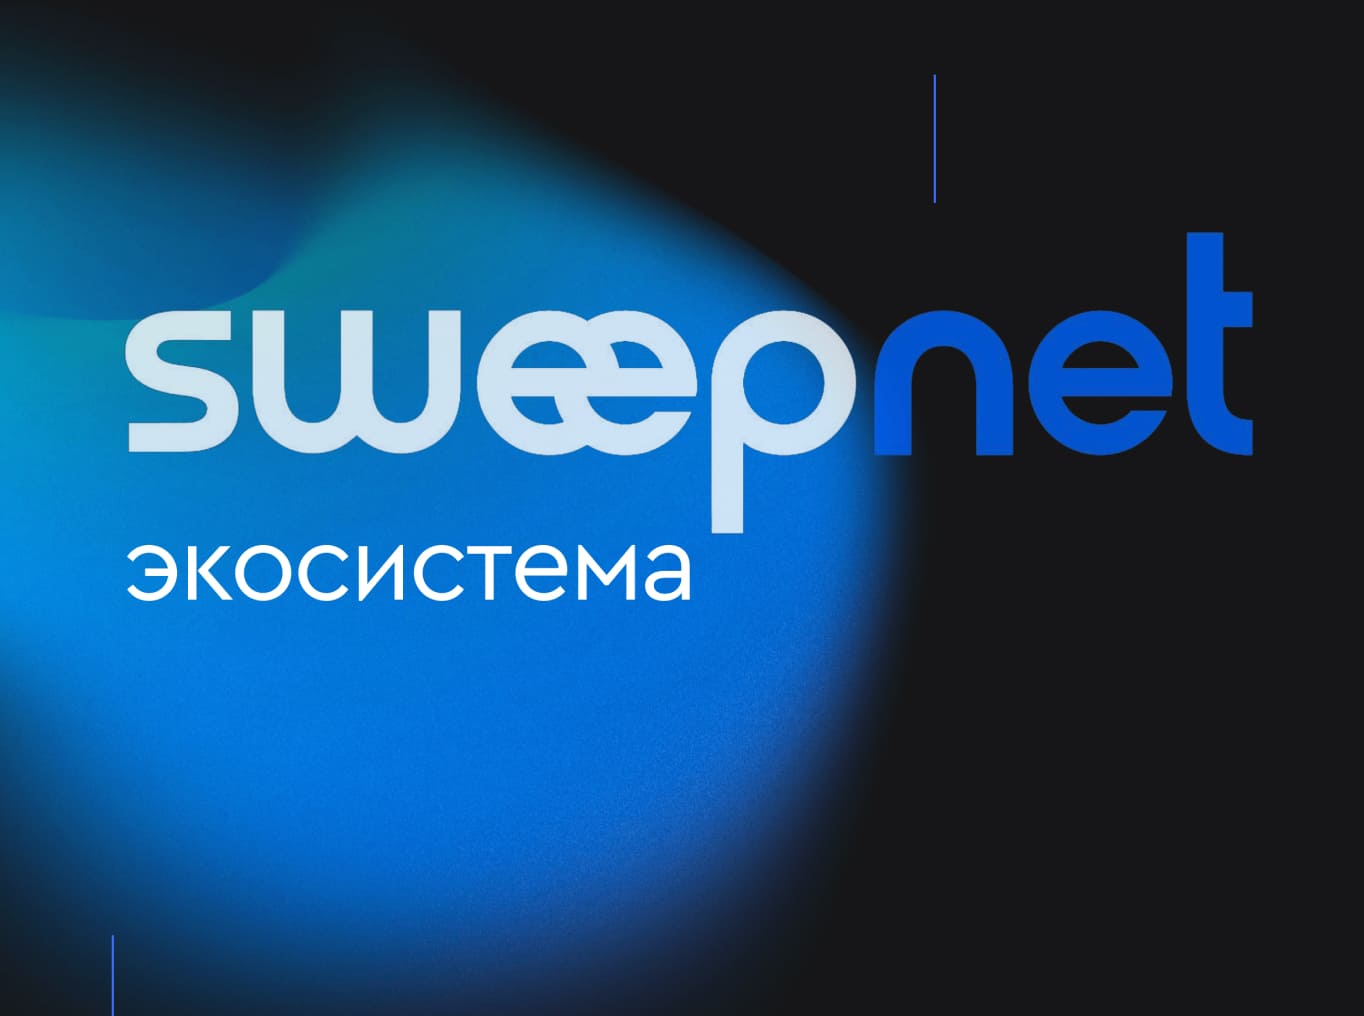 Sweepnet ecosystem services